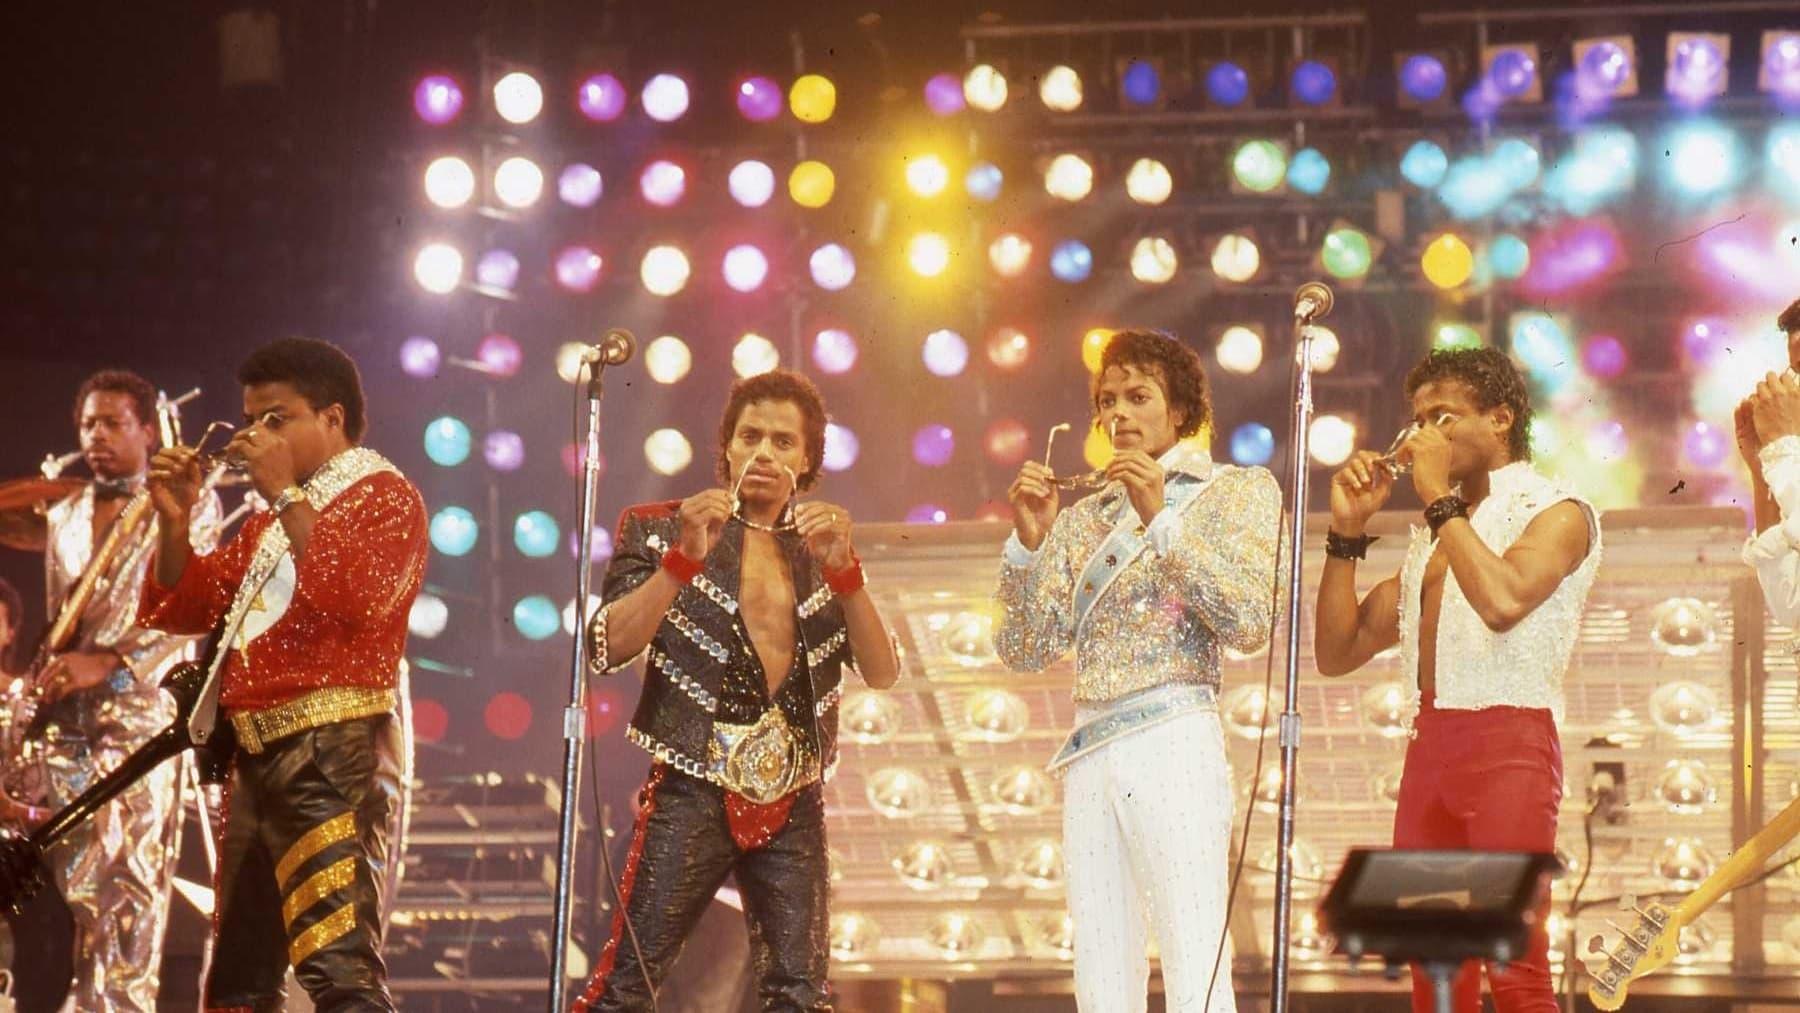 Michael Jackson & The Jacksons - Live Toronto backdrop